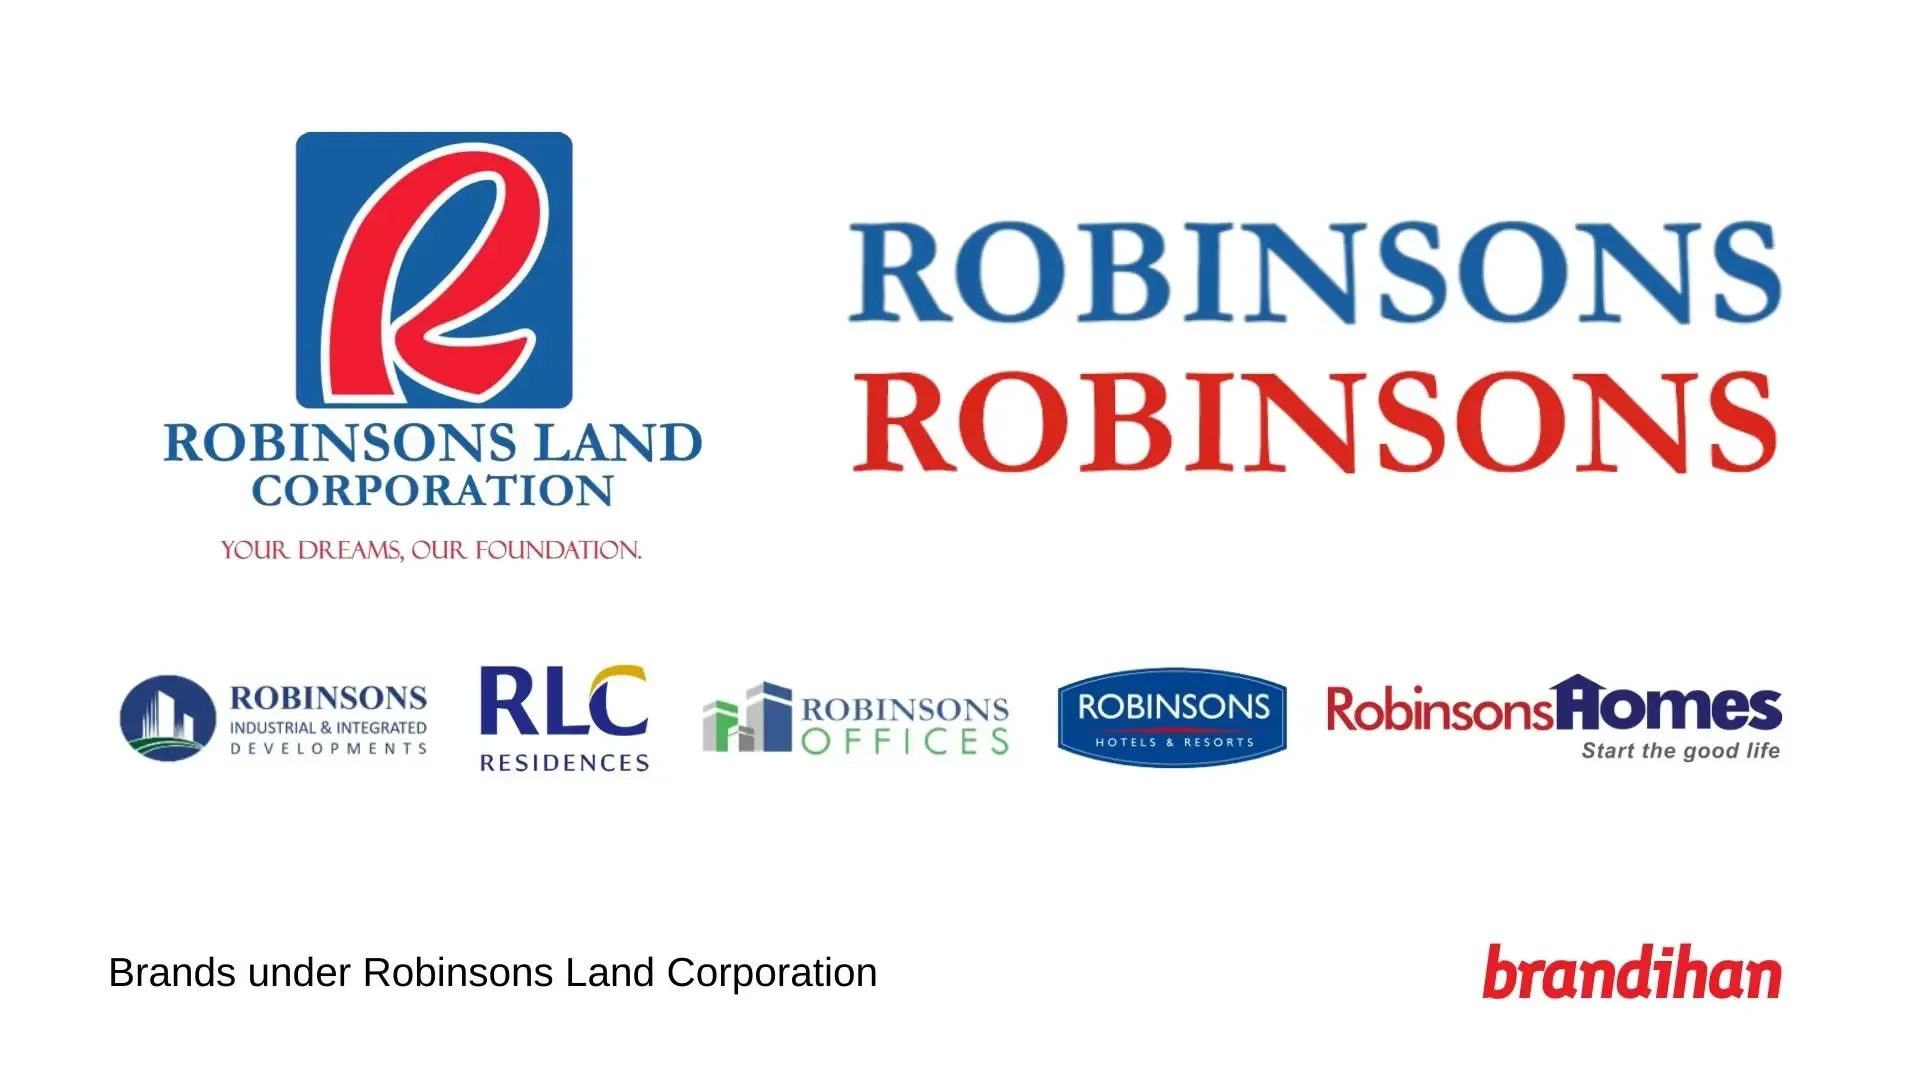 Robinsons Galleria South, Logopedia